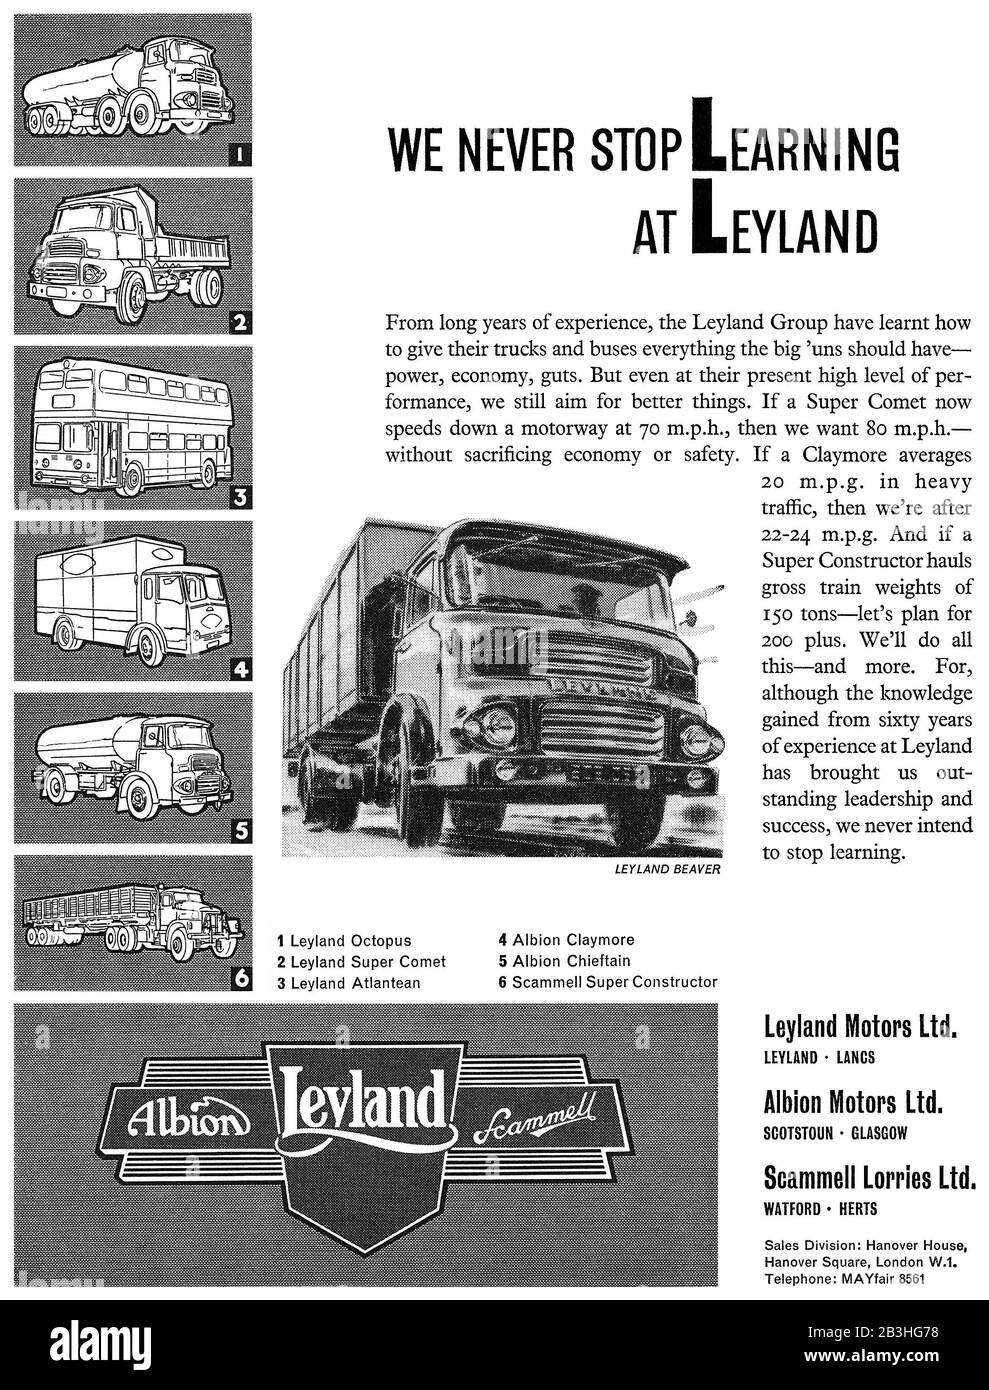 1961 British advertisement for Leyland Motors. Stock Photo